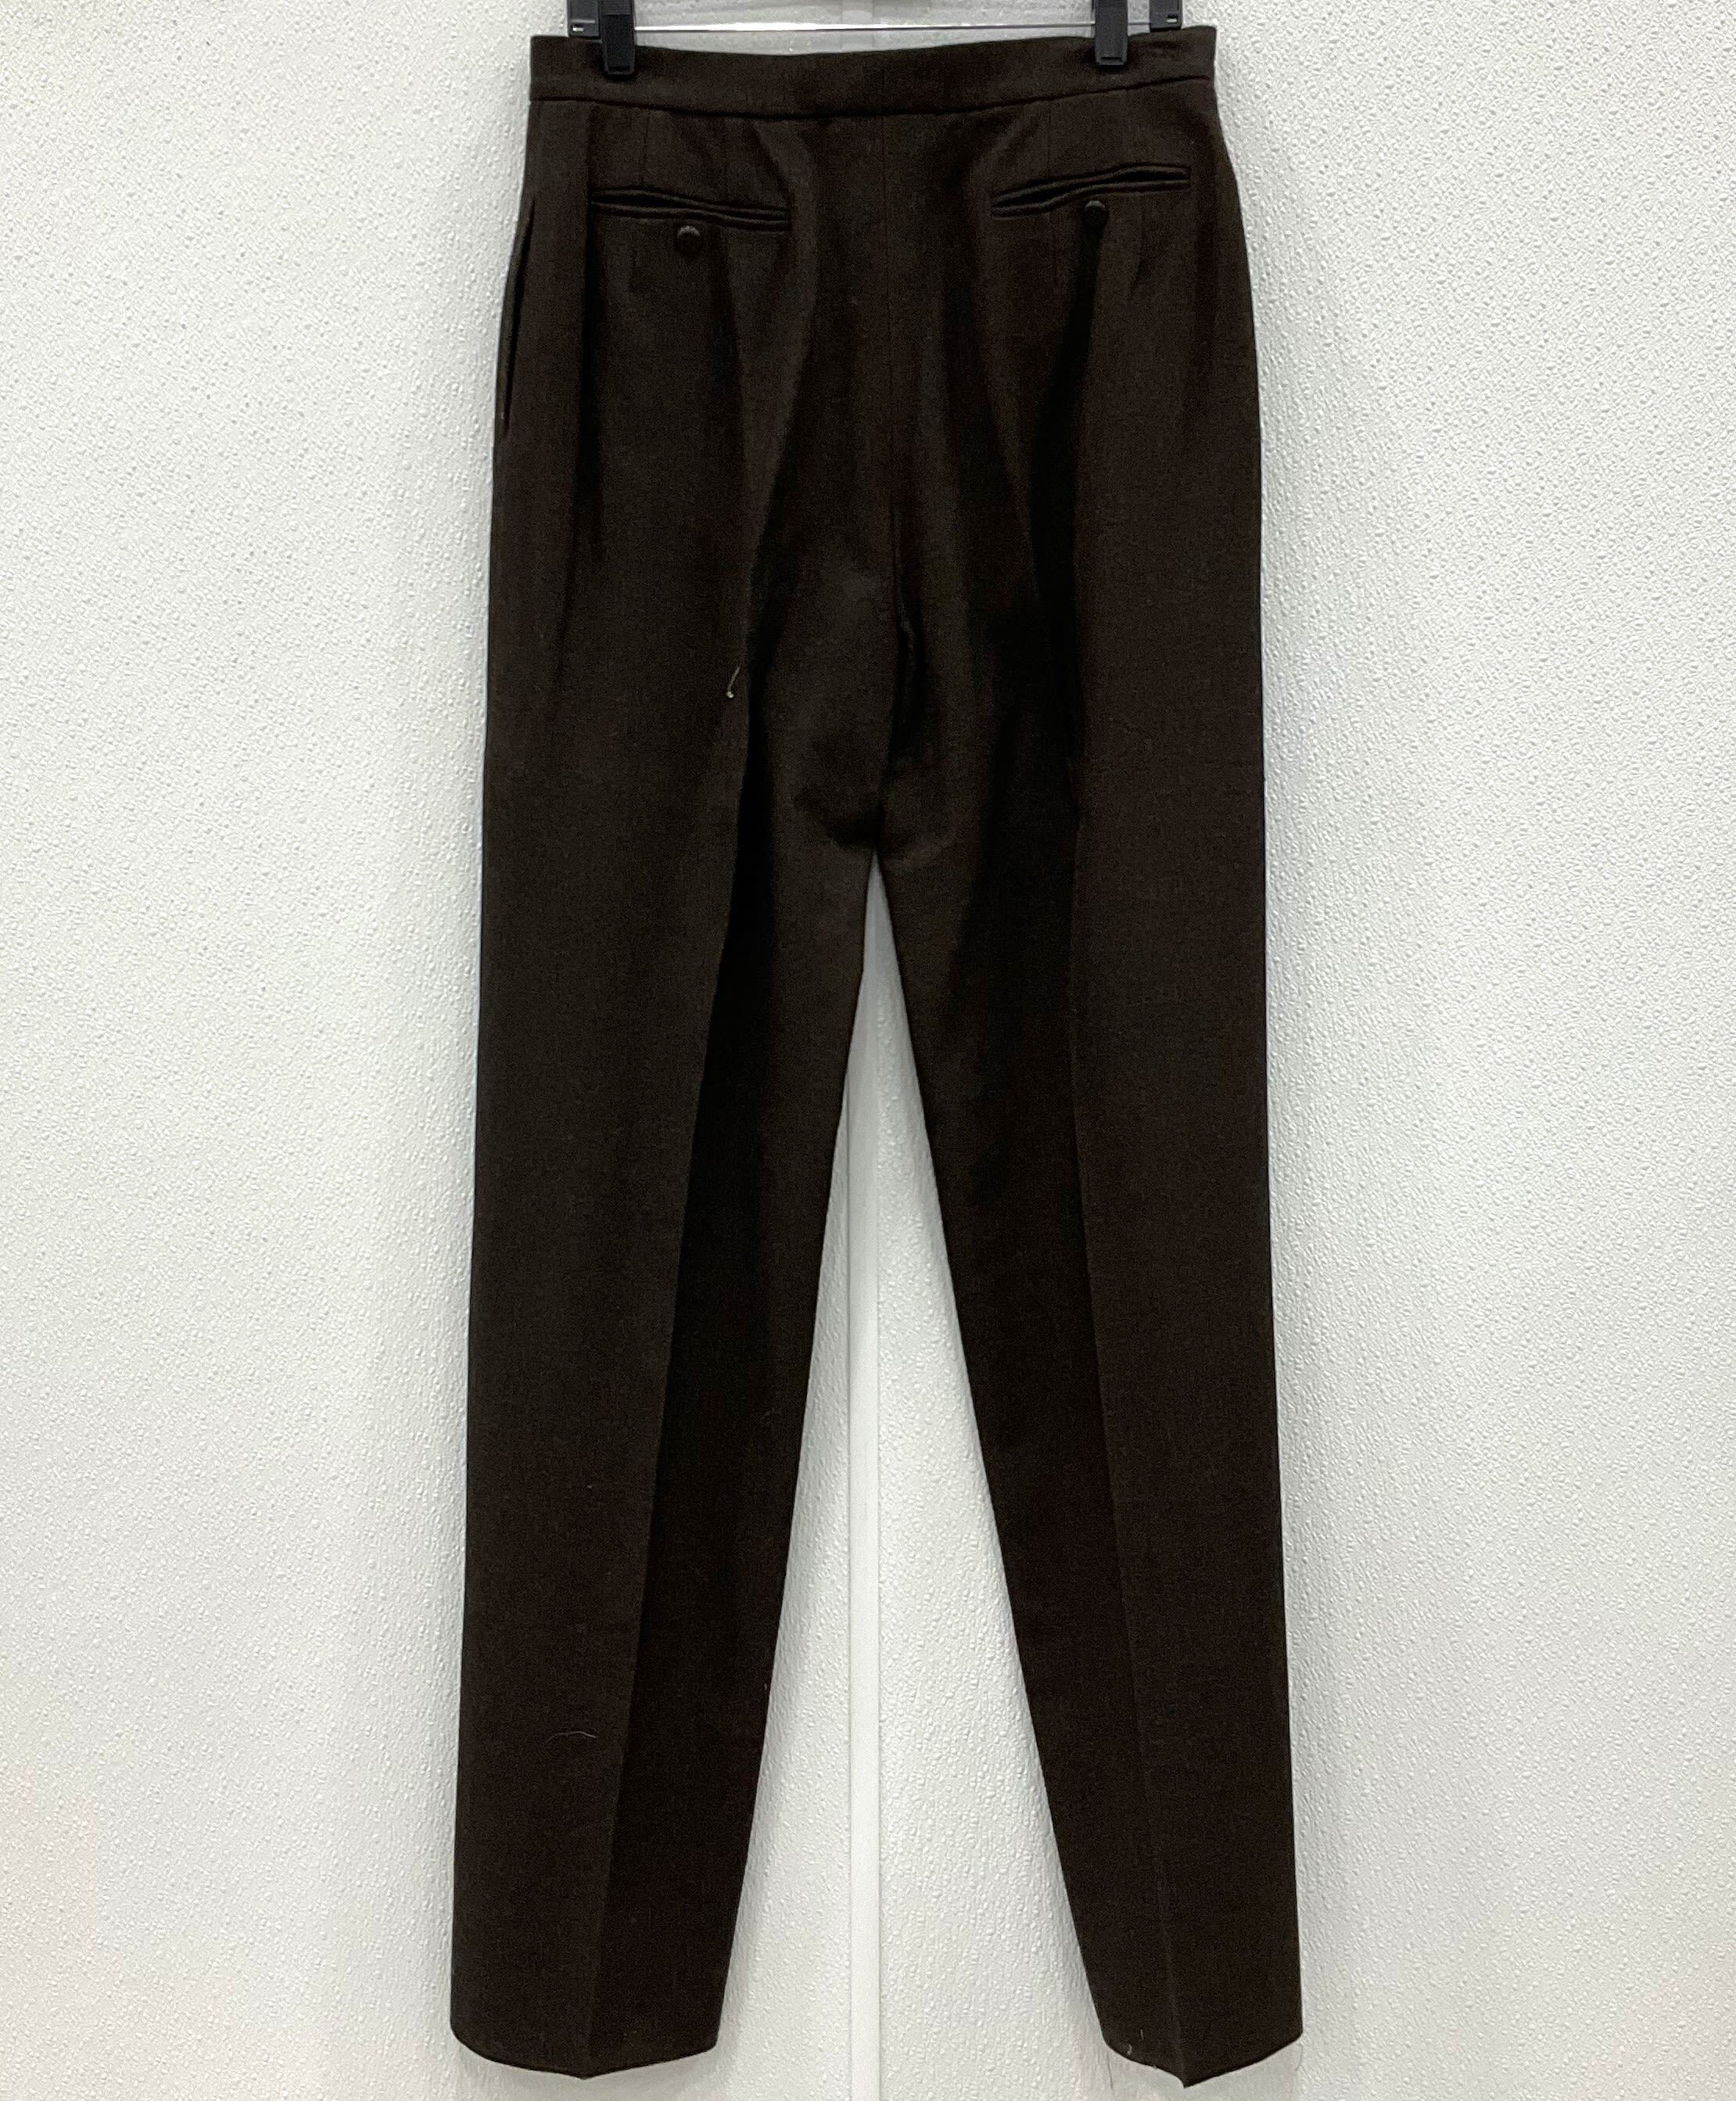 Stella Mccartney Virgin Wool Tapered Trousers, Brand Size 36 (US Size 4)  244734 S1735-4101 - Apparel - Jomashop